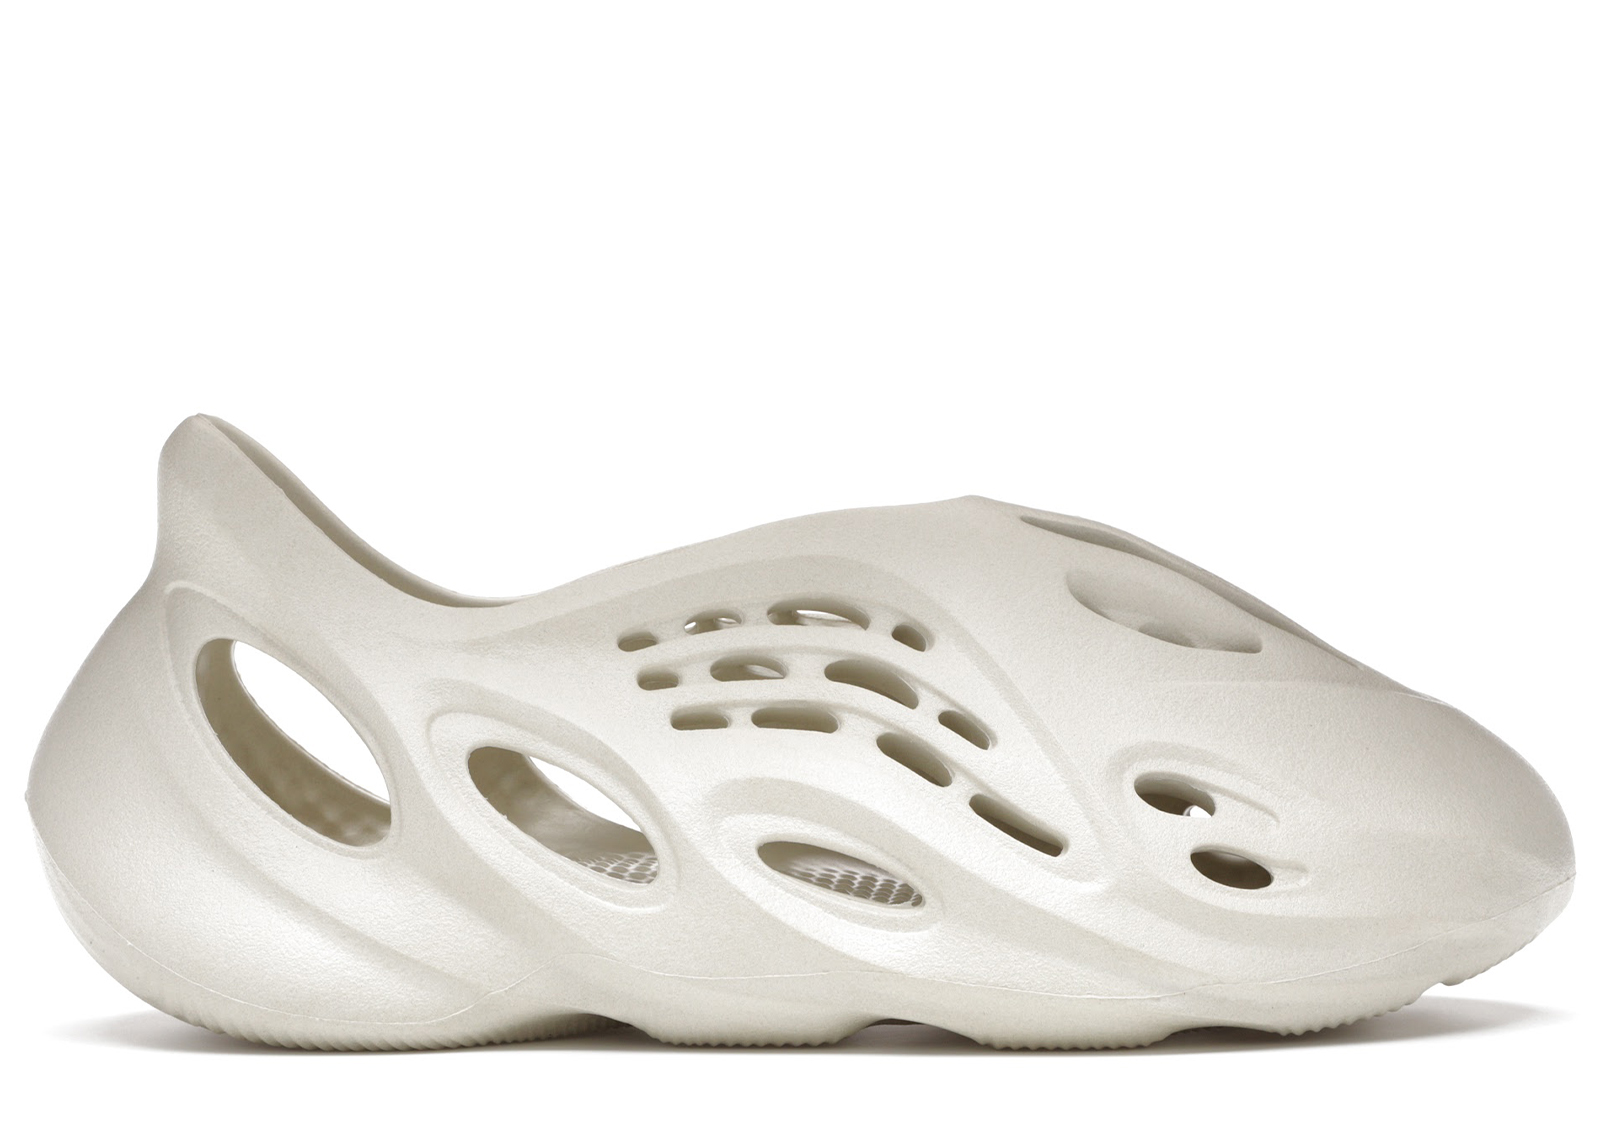 adidas YEEZY Foam Runner